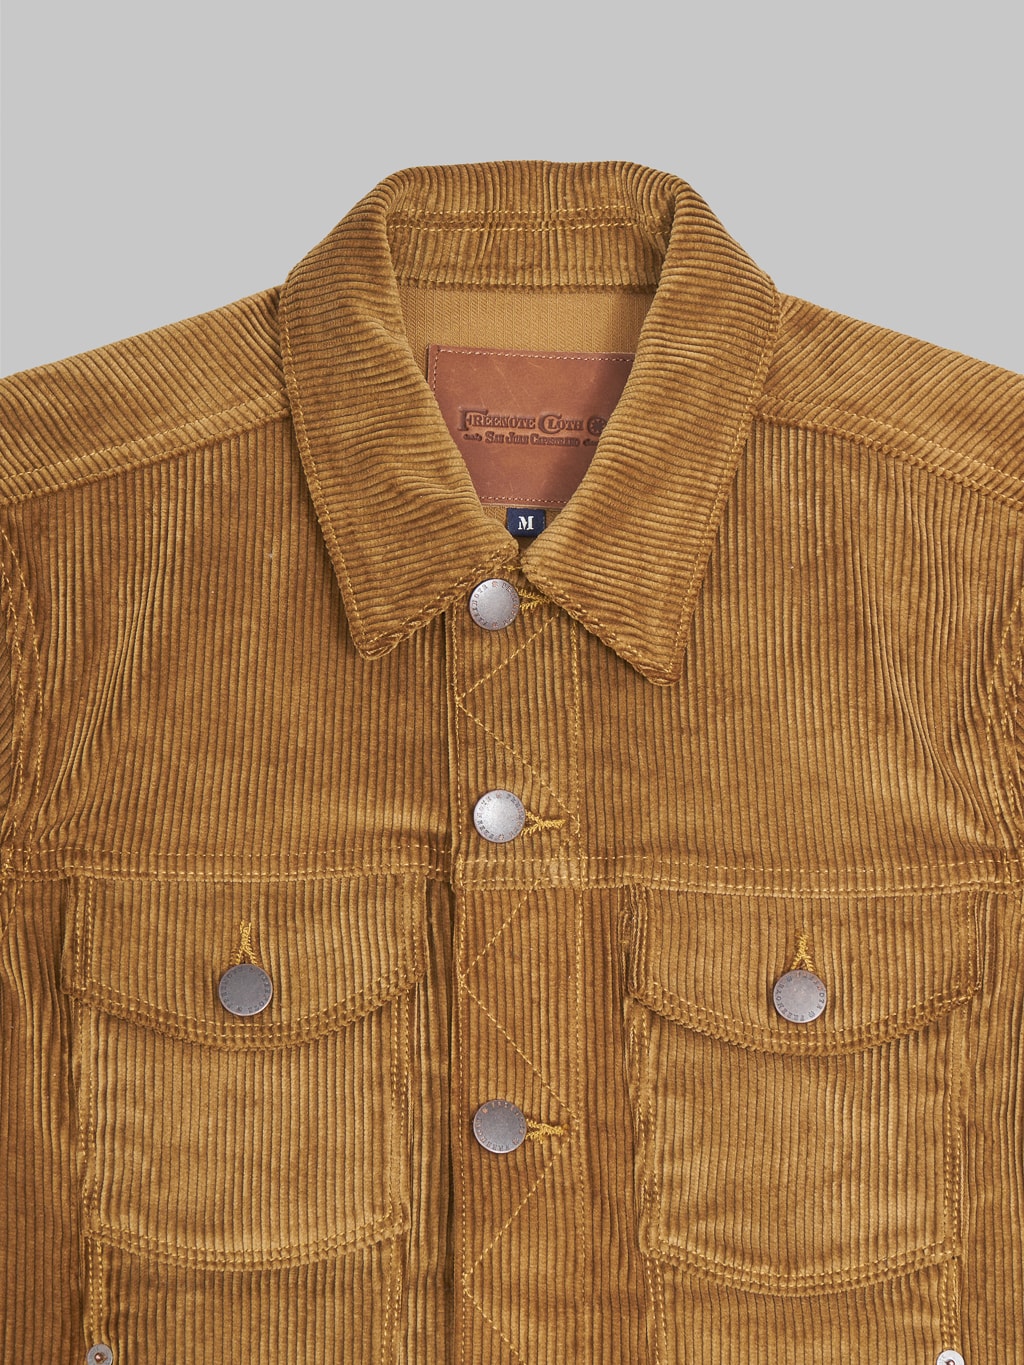 Freenote Cloth Classic Jacket Gold Corduroy  chest pockets